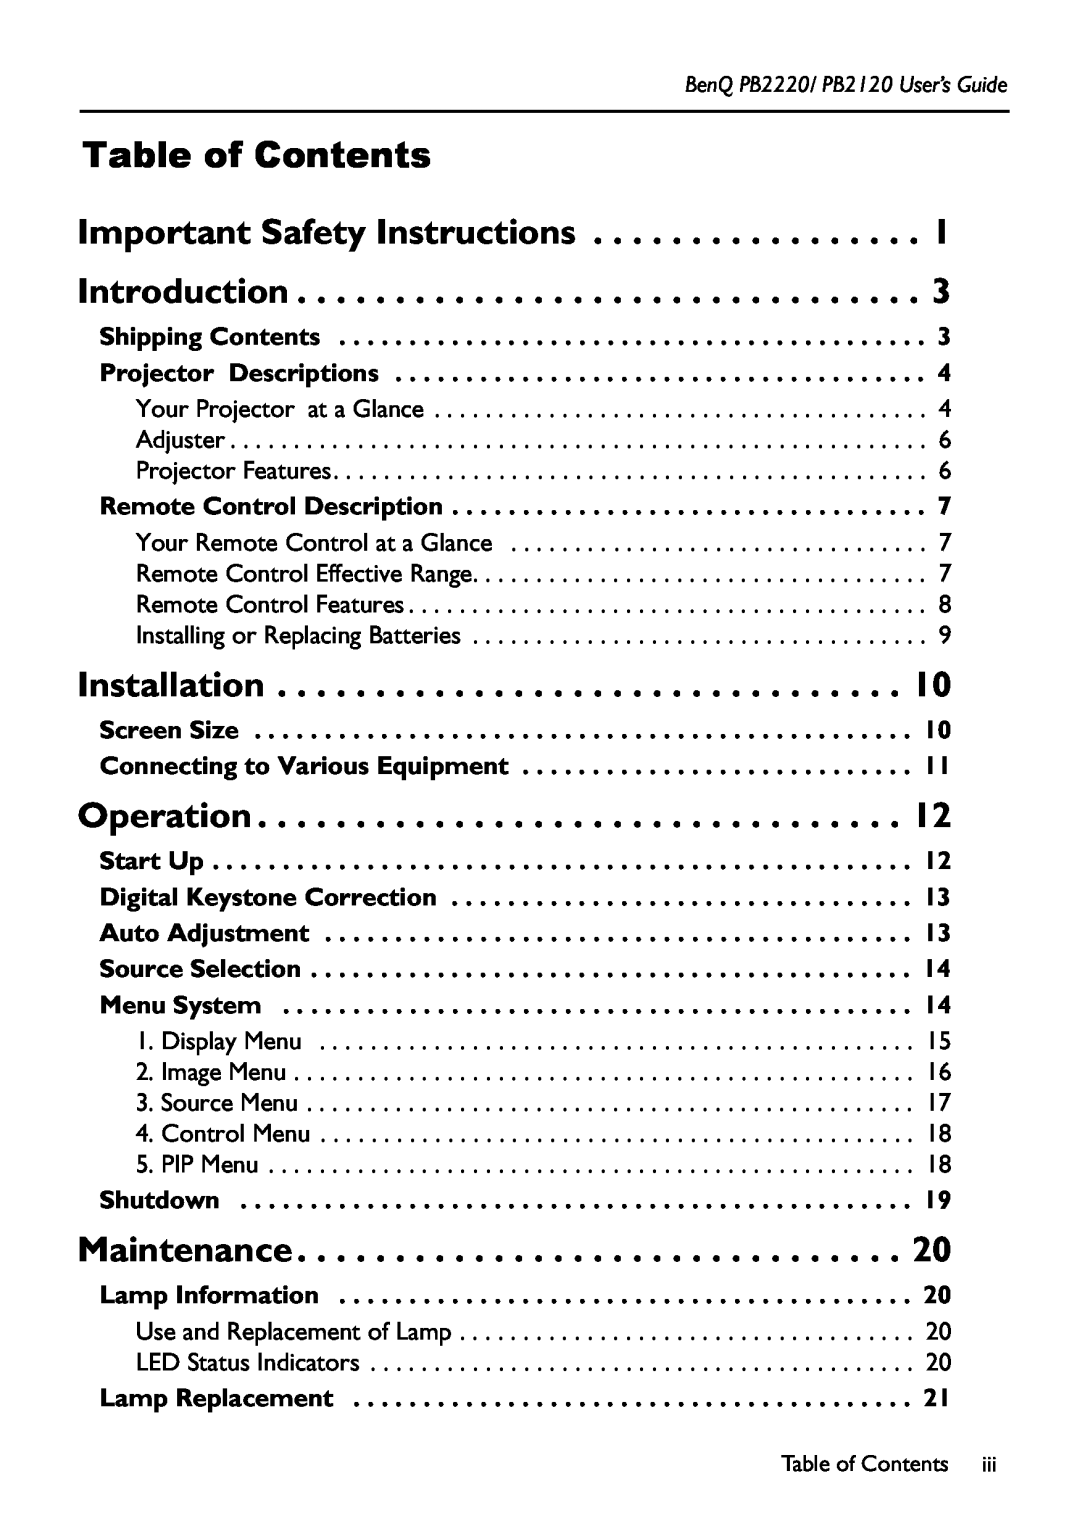 BenQ PB2220 manual Table of Contents, Installation, Operation, Maintenance, Remote Control Description, Menu System 